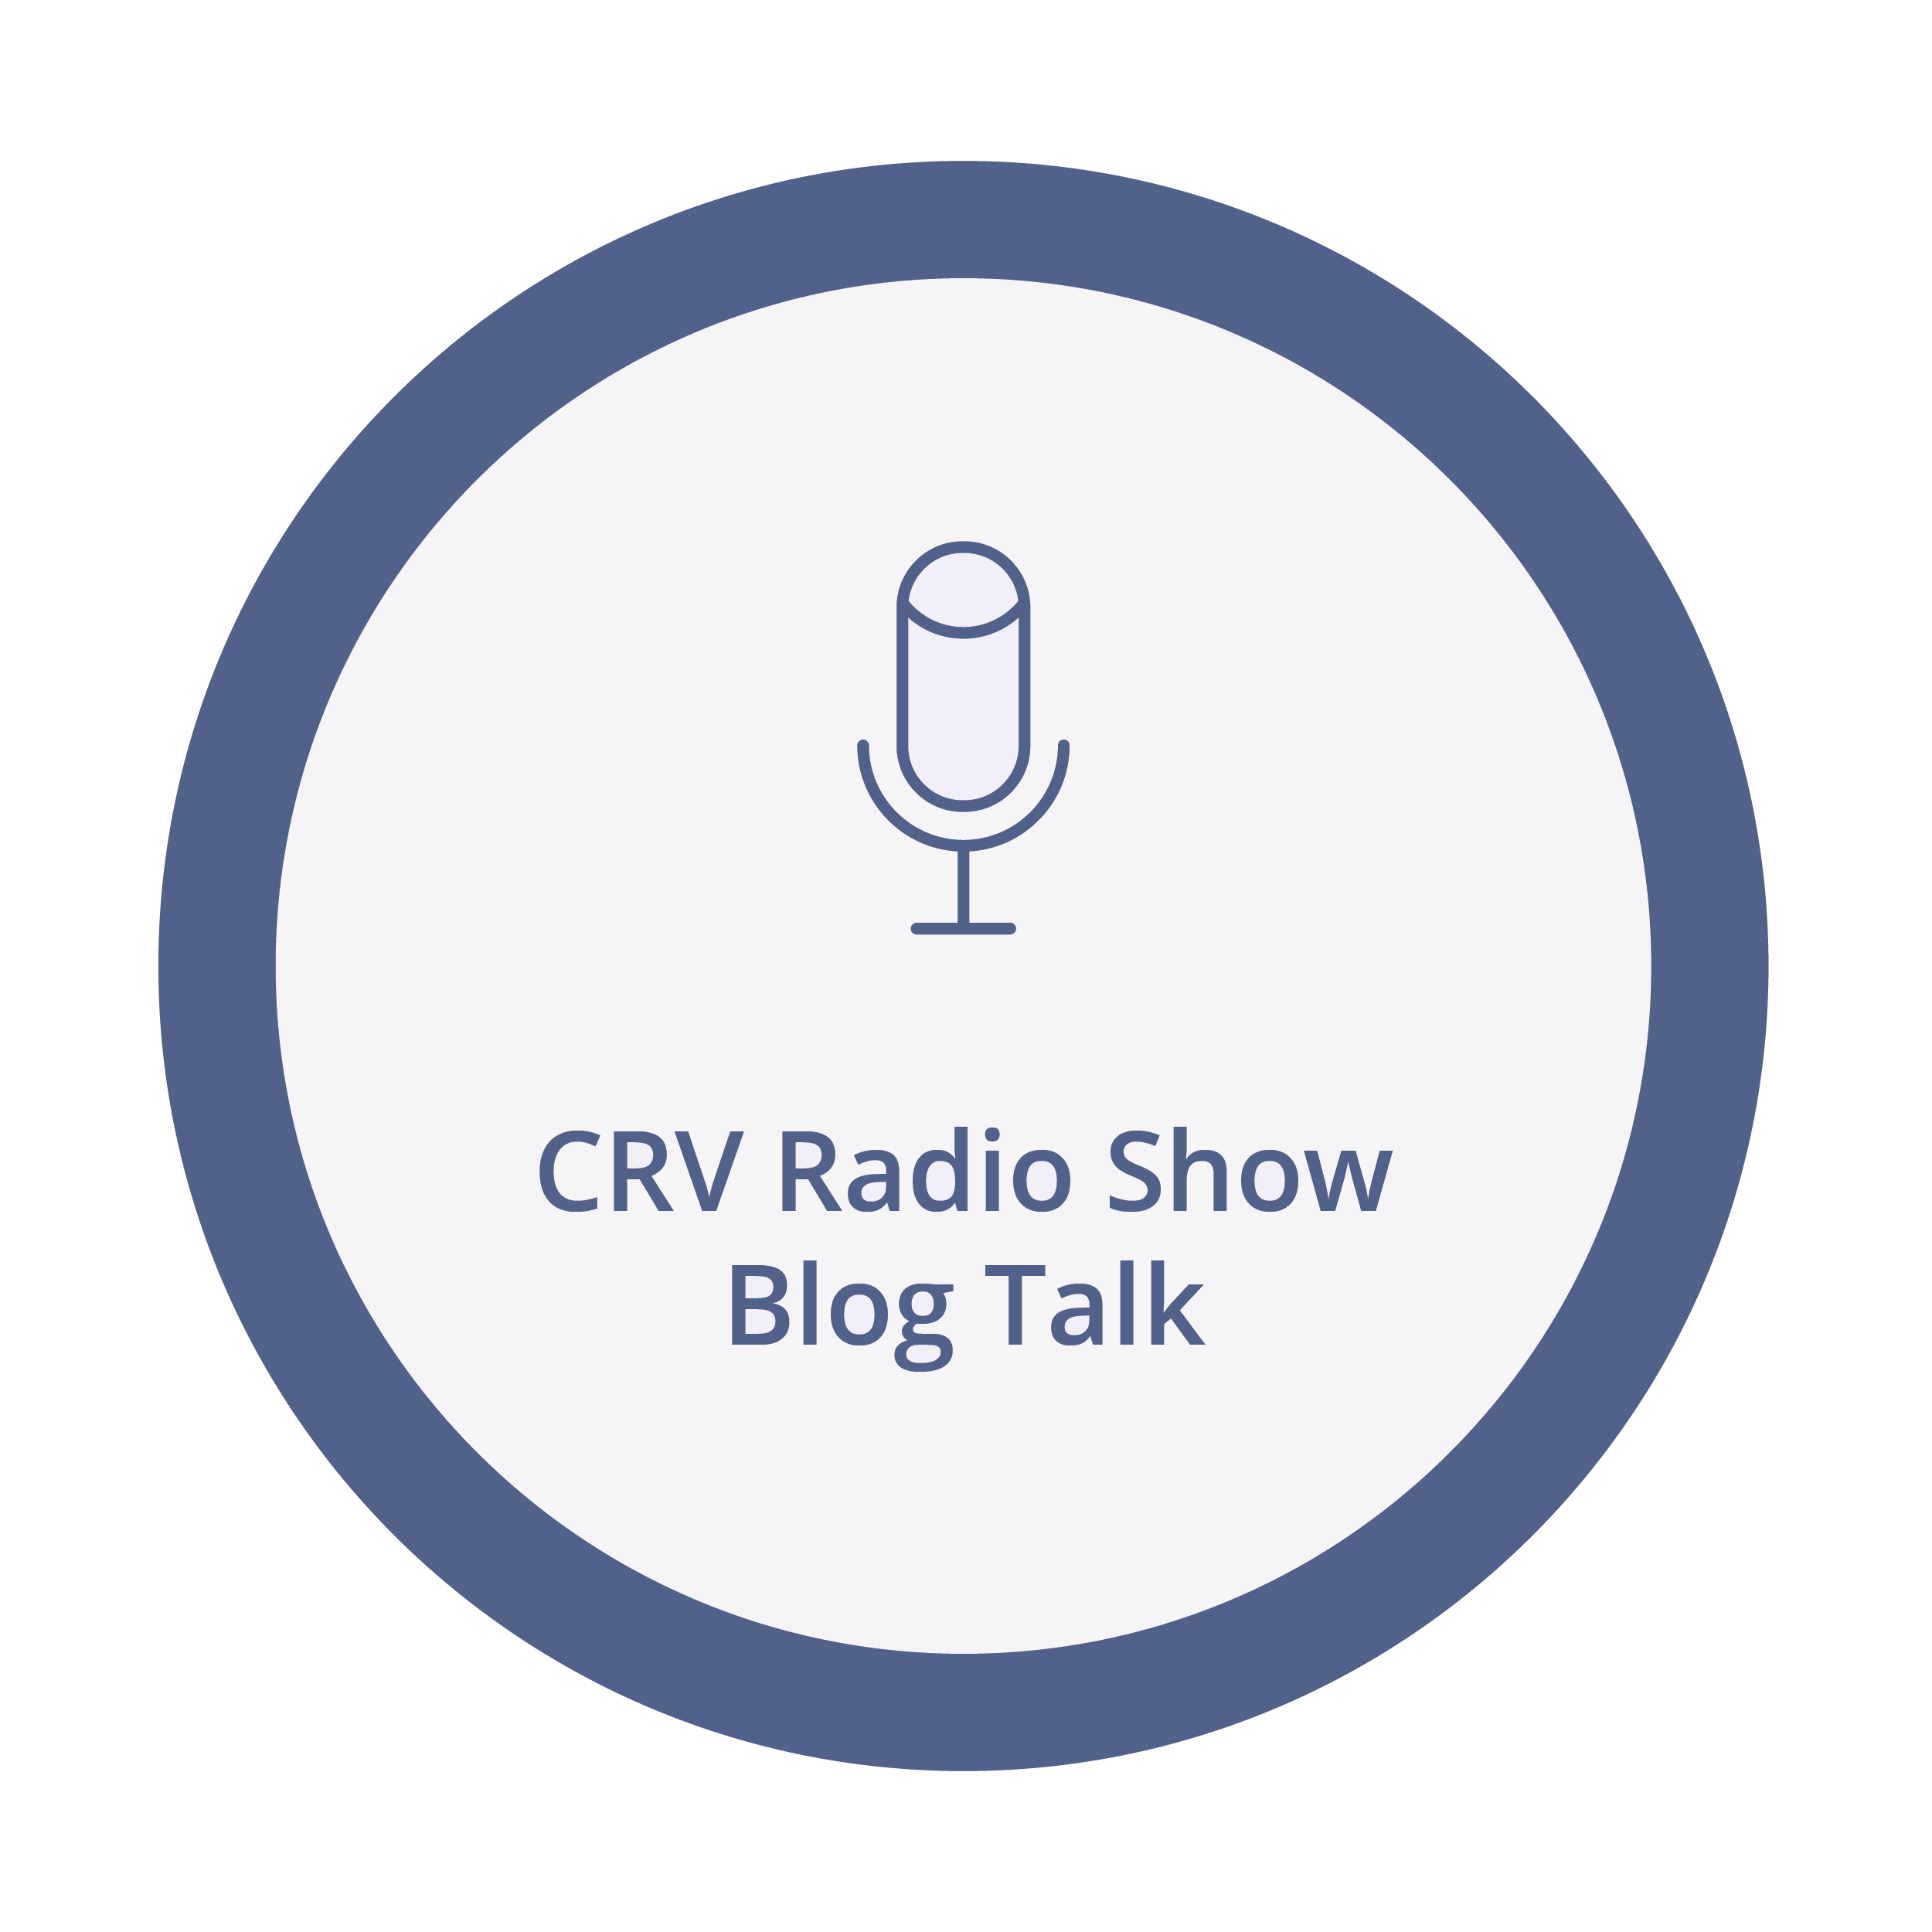 View CRV Radio Show Blog Talk